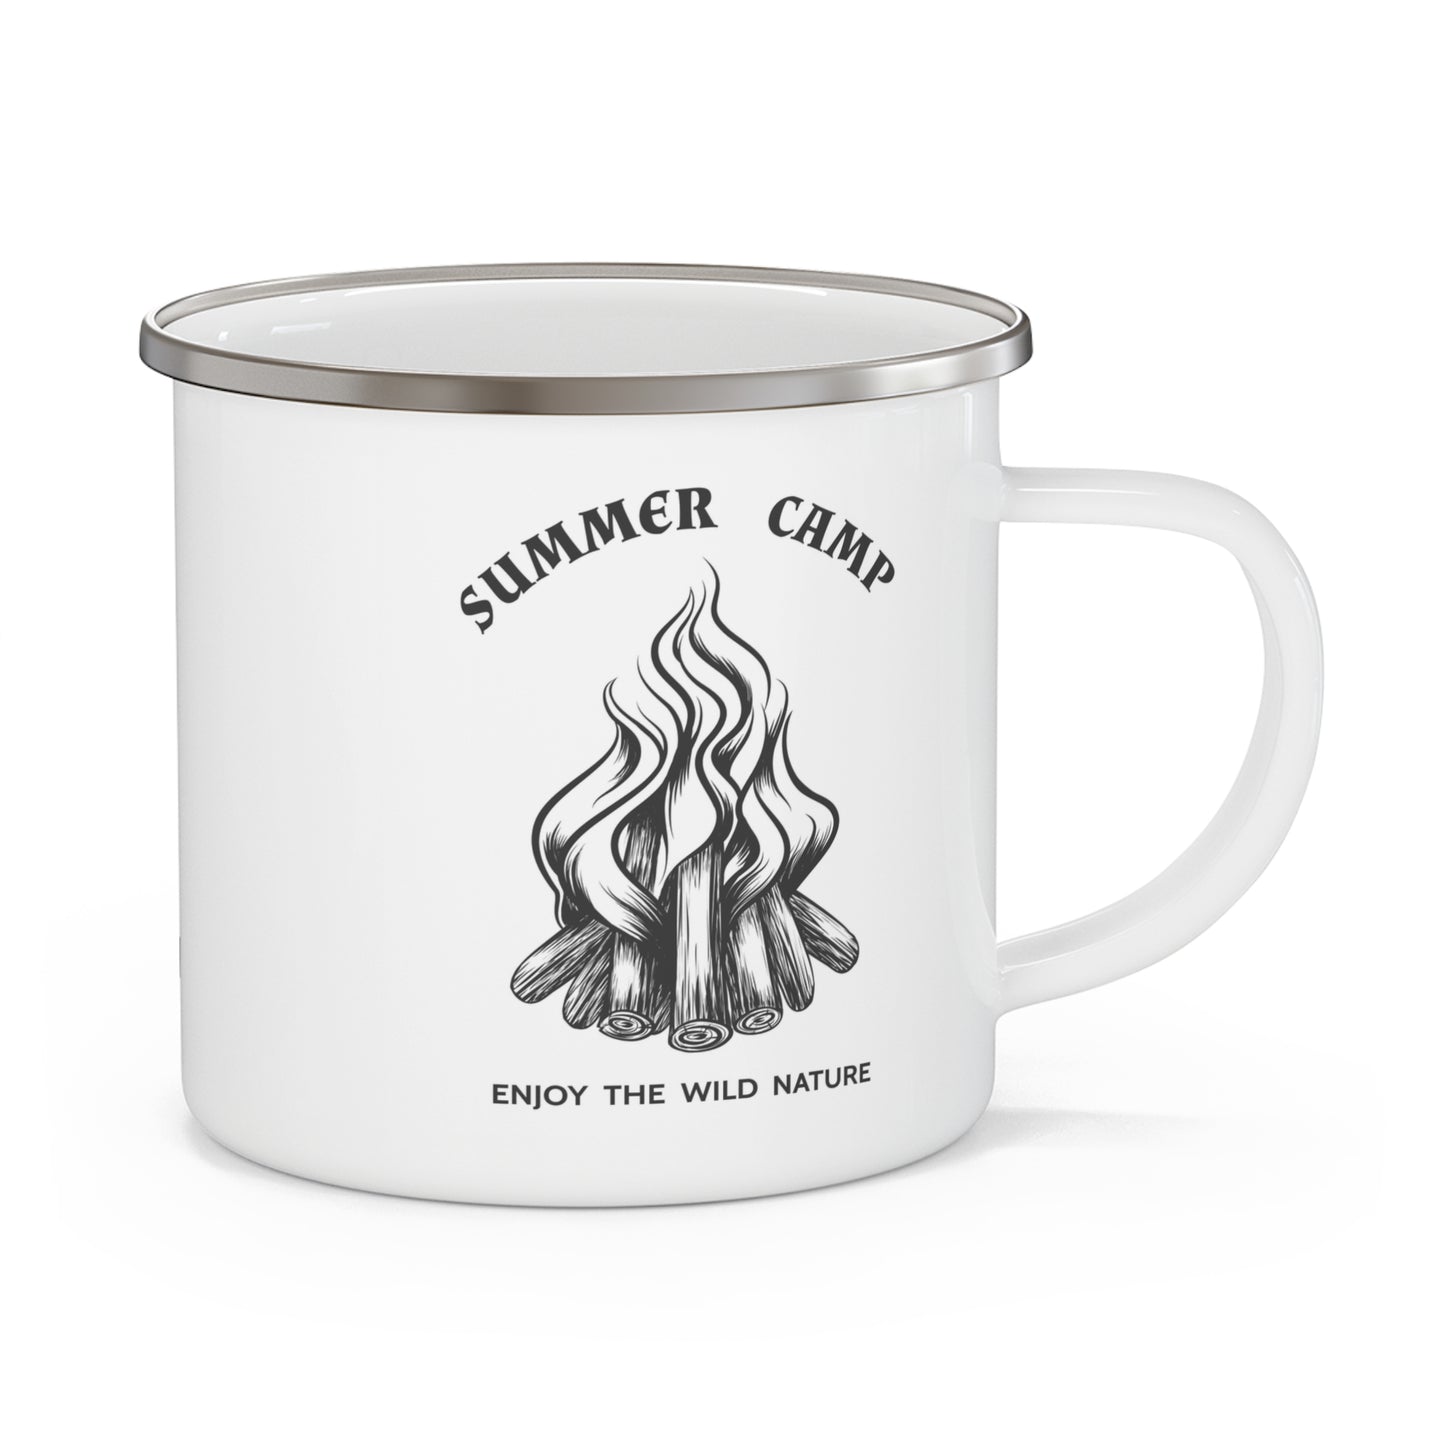 Camp fire - Enamel Camping Mug